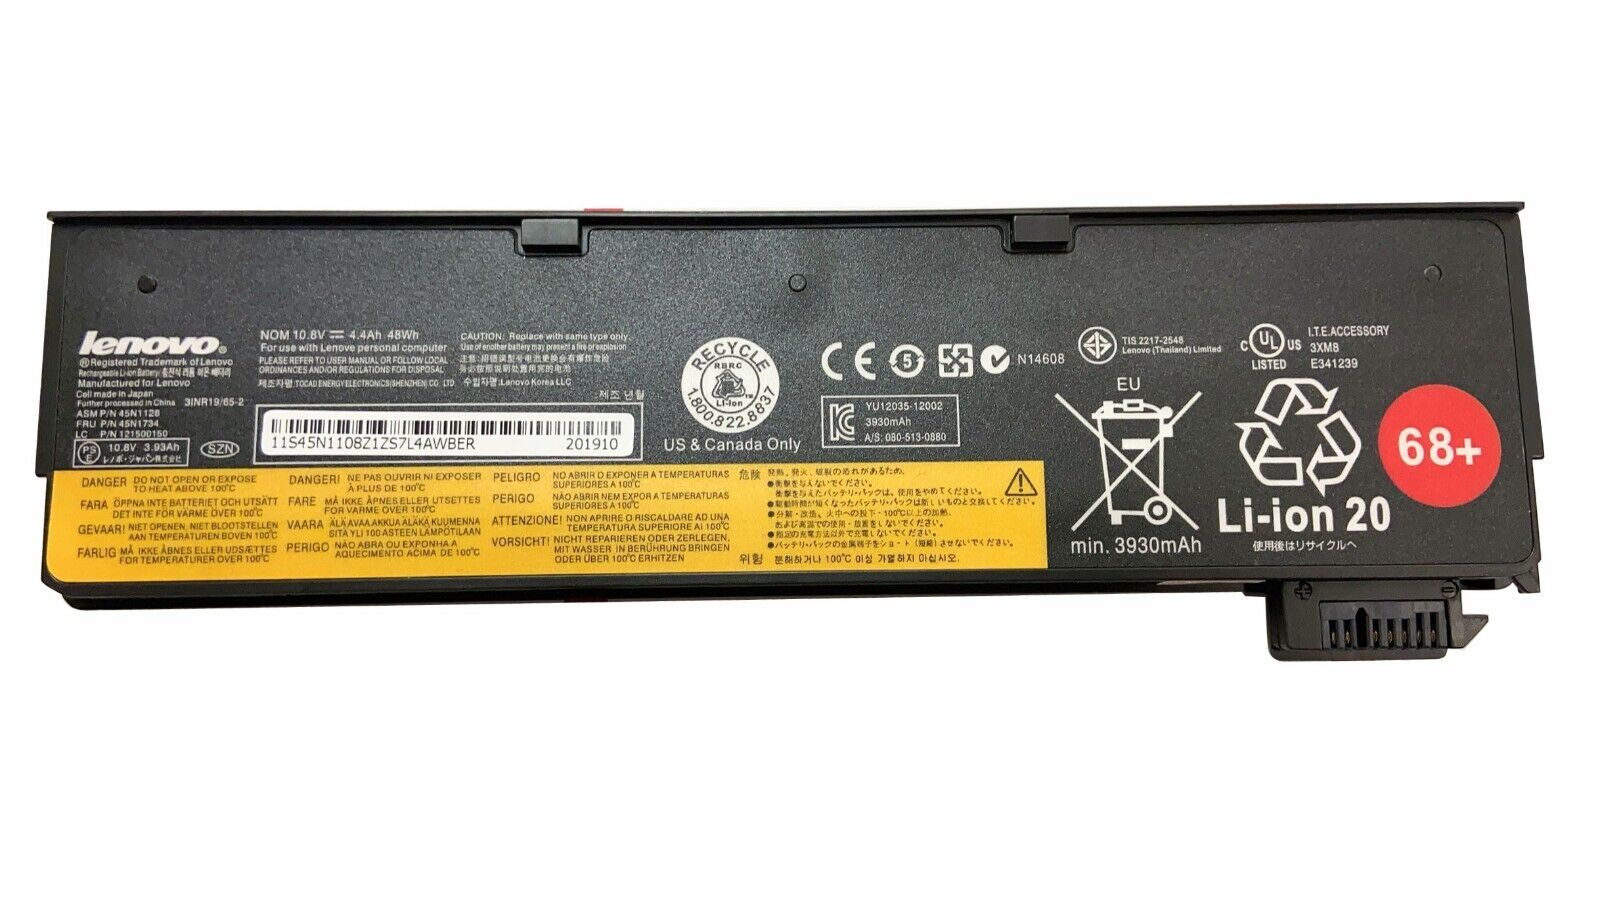 Genuine X240 240S Battery for Lenovo Thinkpad 0C52861 0c52862 0c52862 68+ 48WH